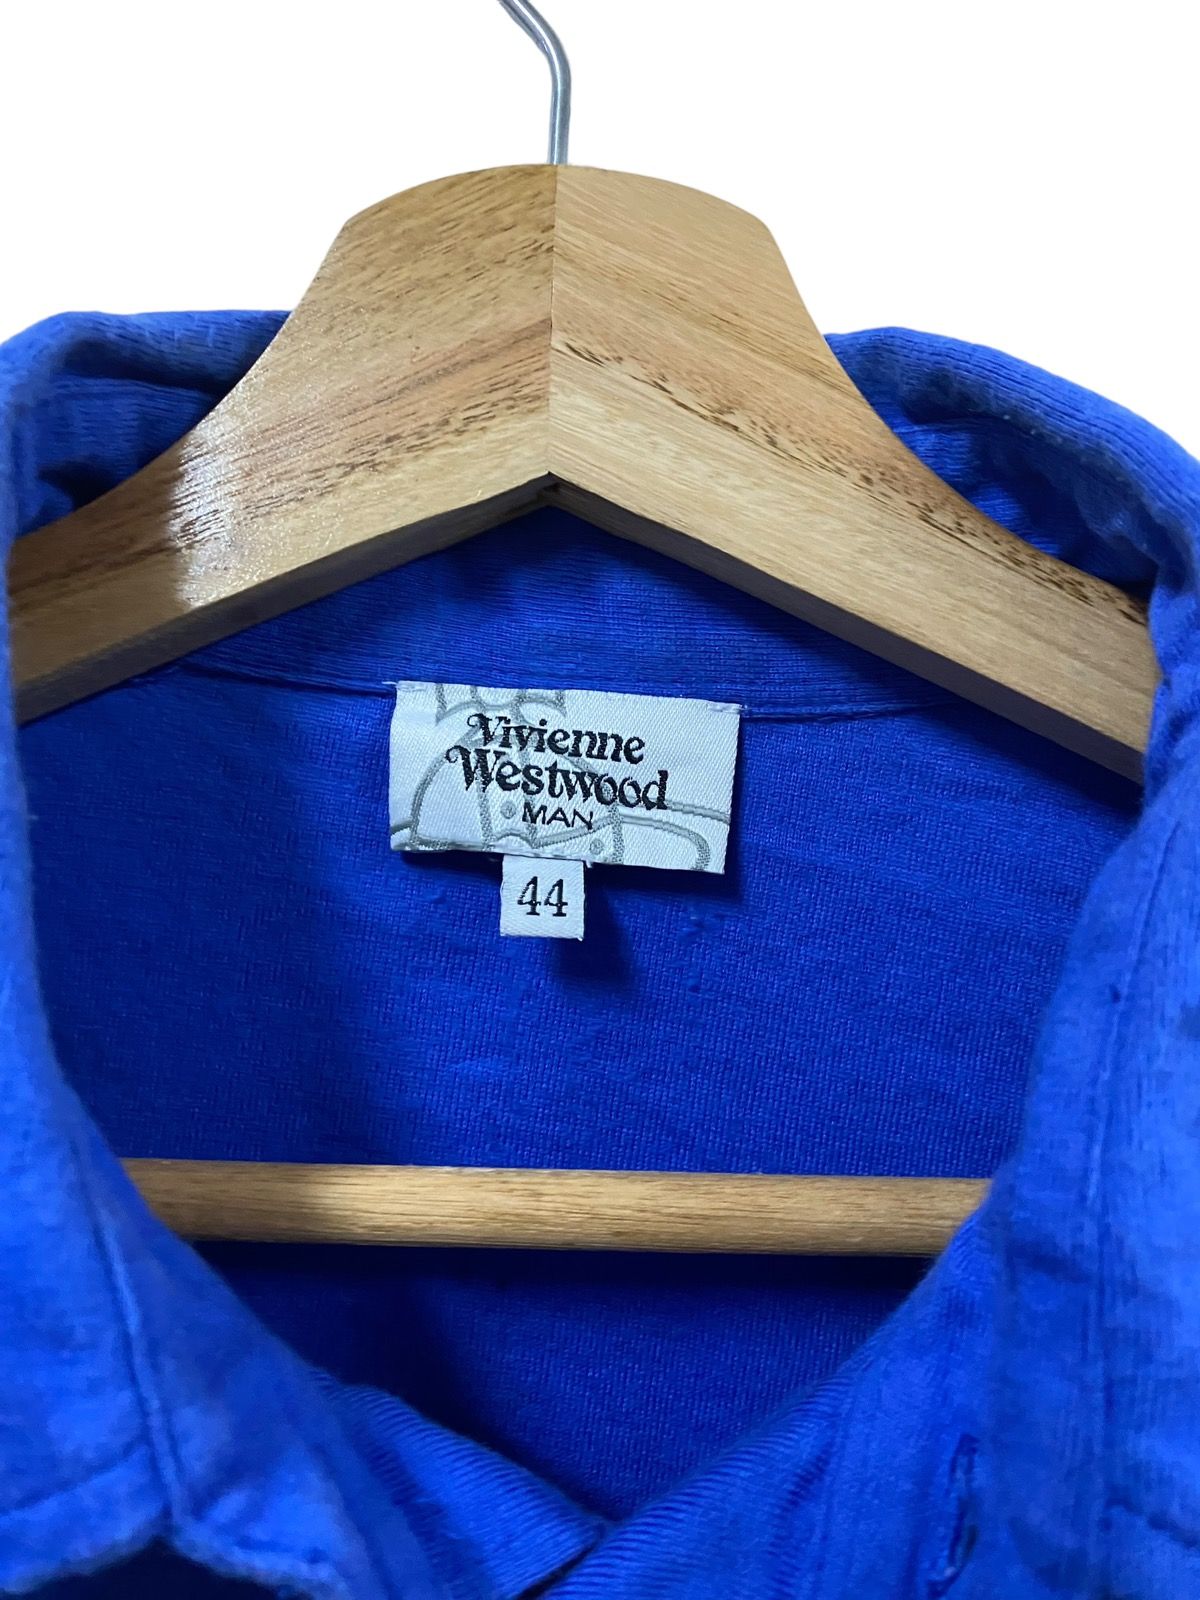 Vivienne Westwood Man Polo Shirt - 6